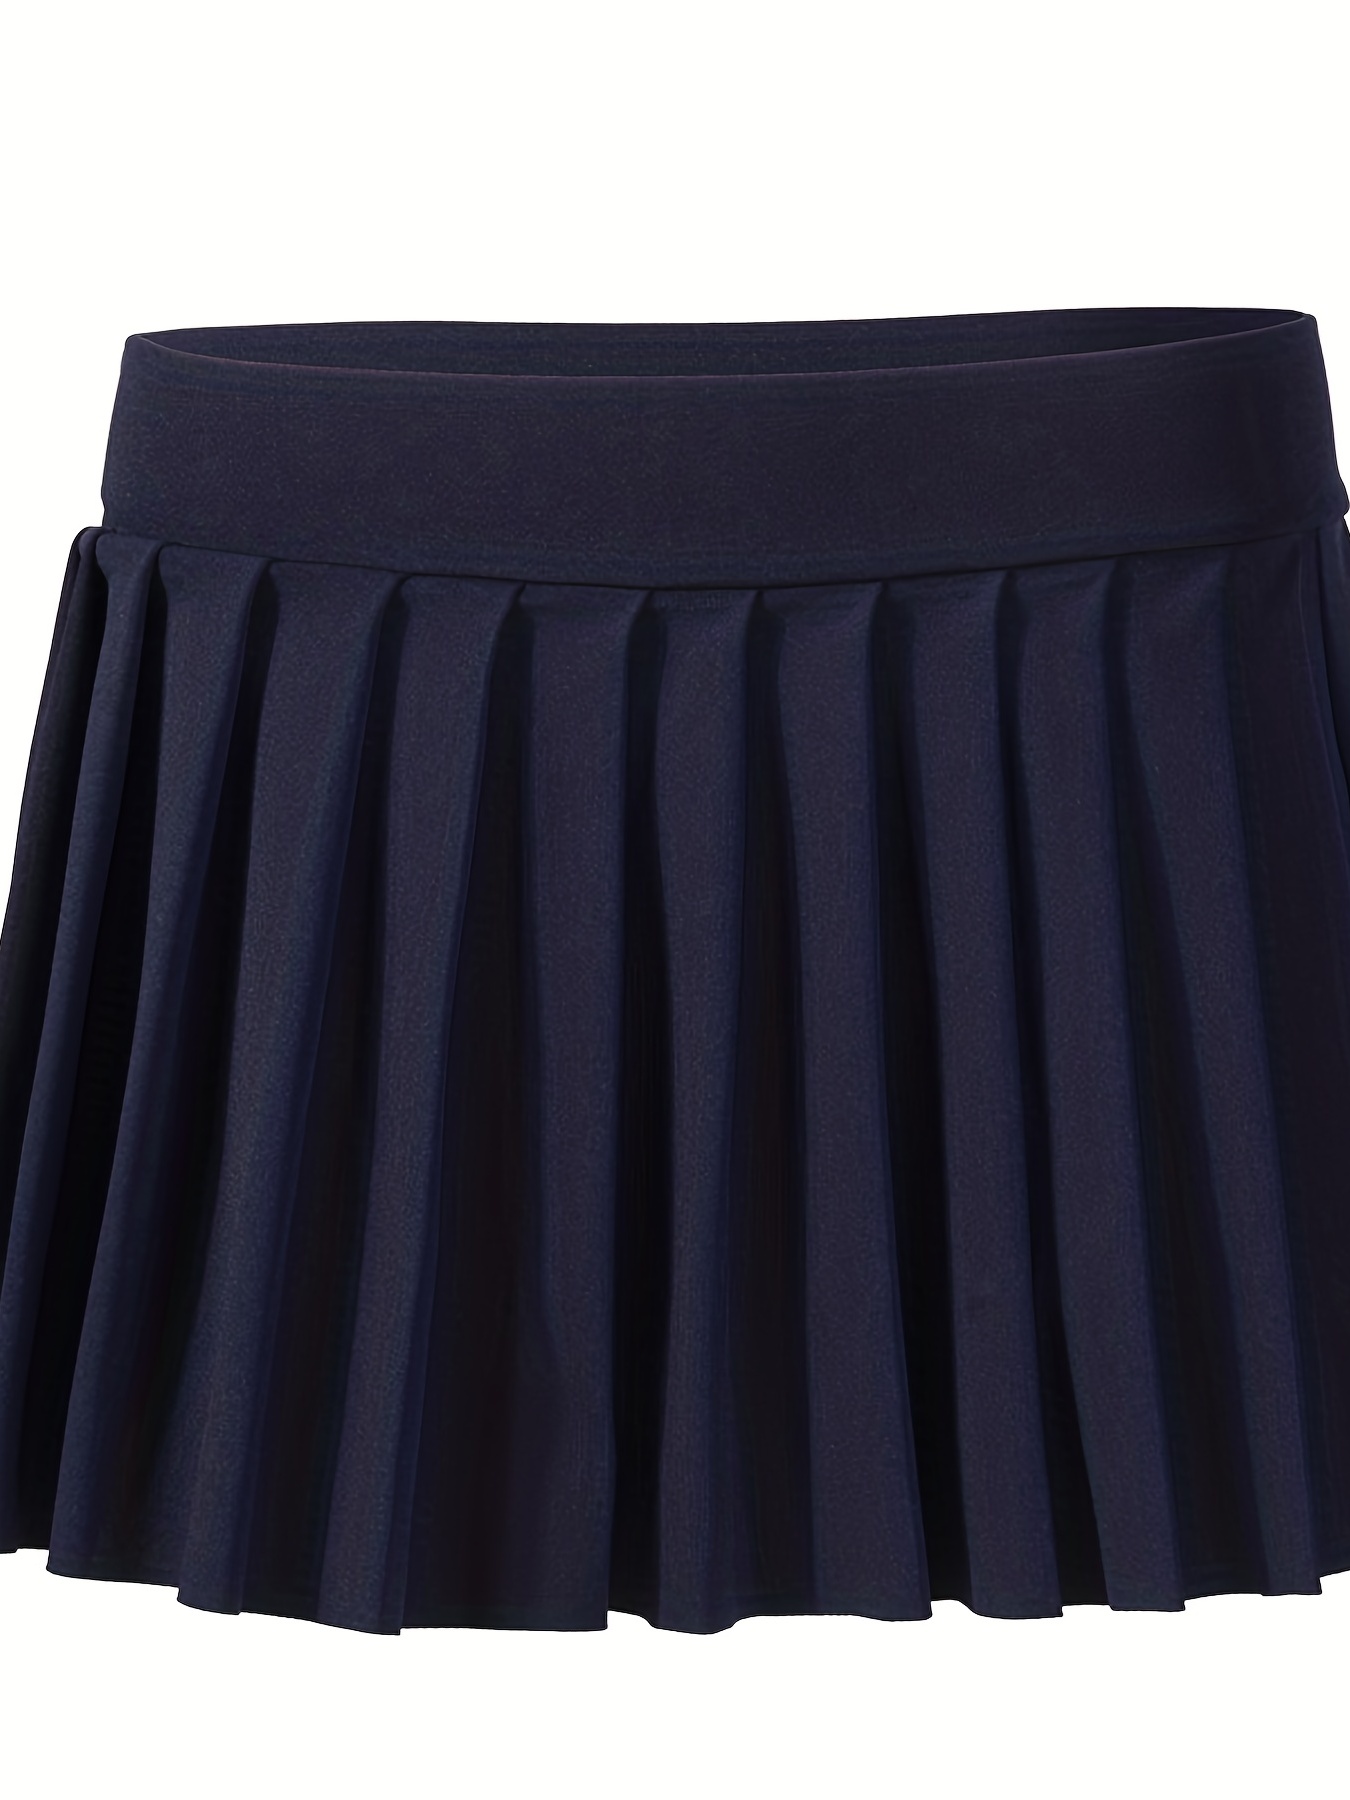 Elastic Waist Pleated Skirts For Tennis Golf Sports Short Skirts